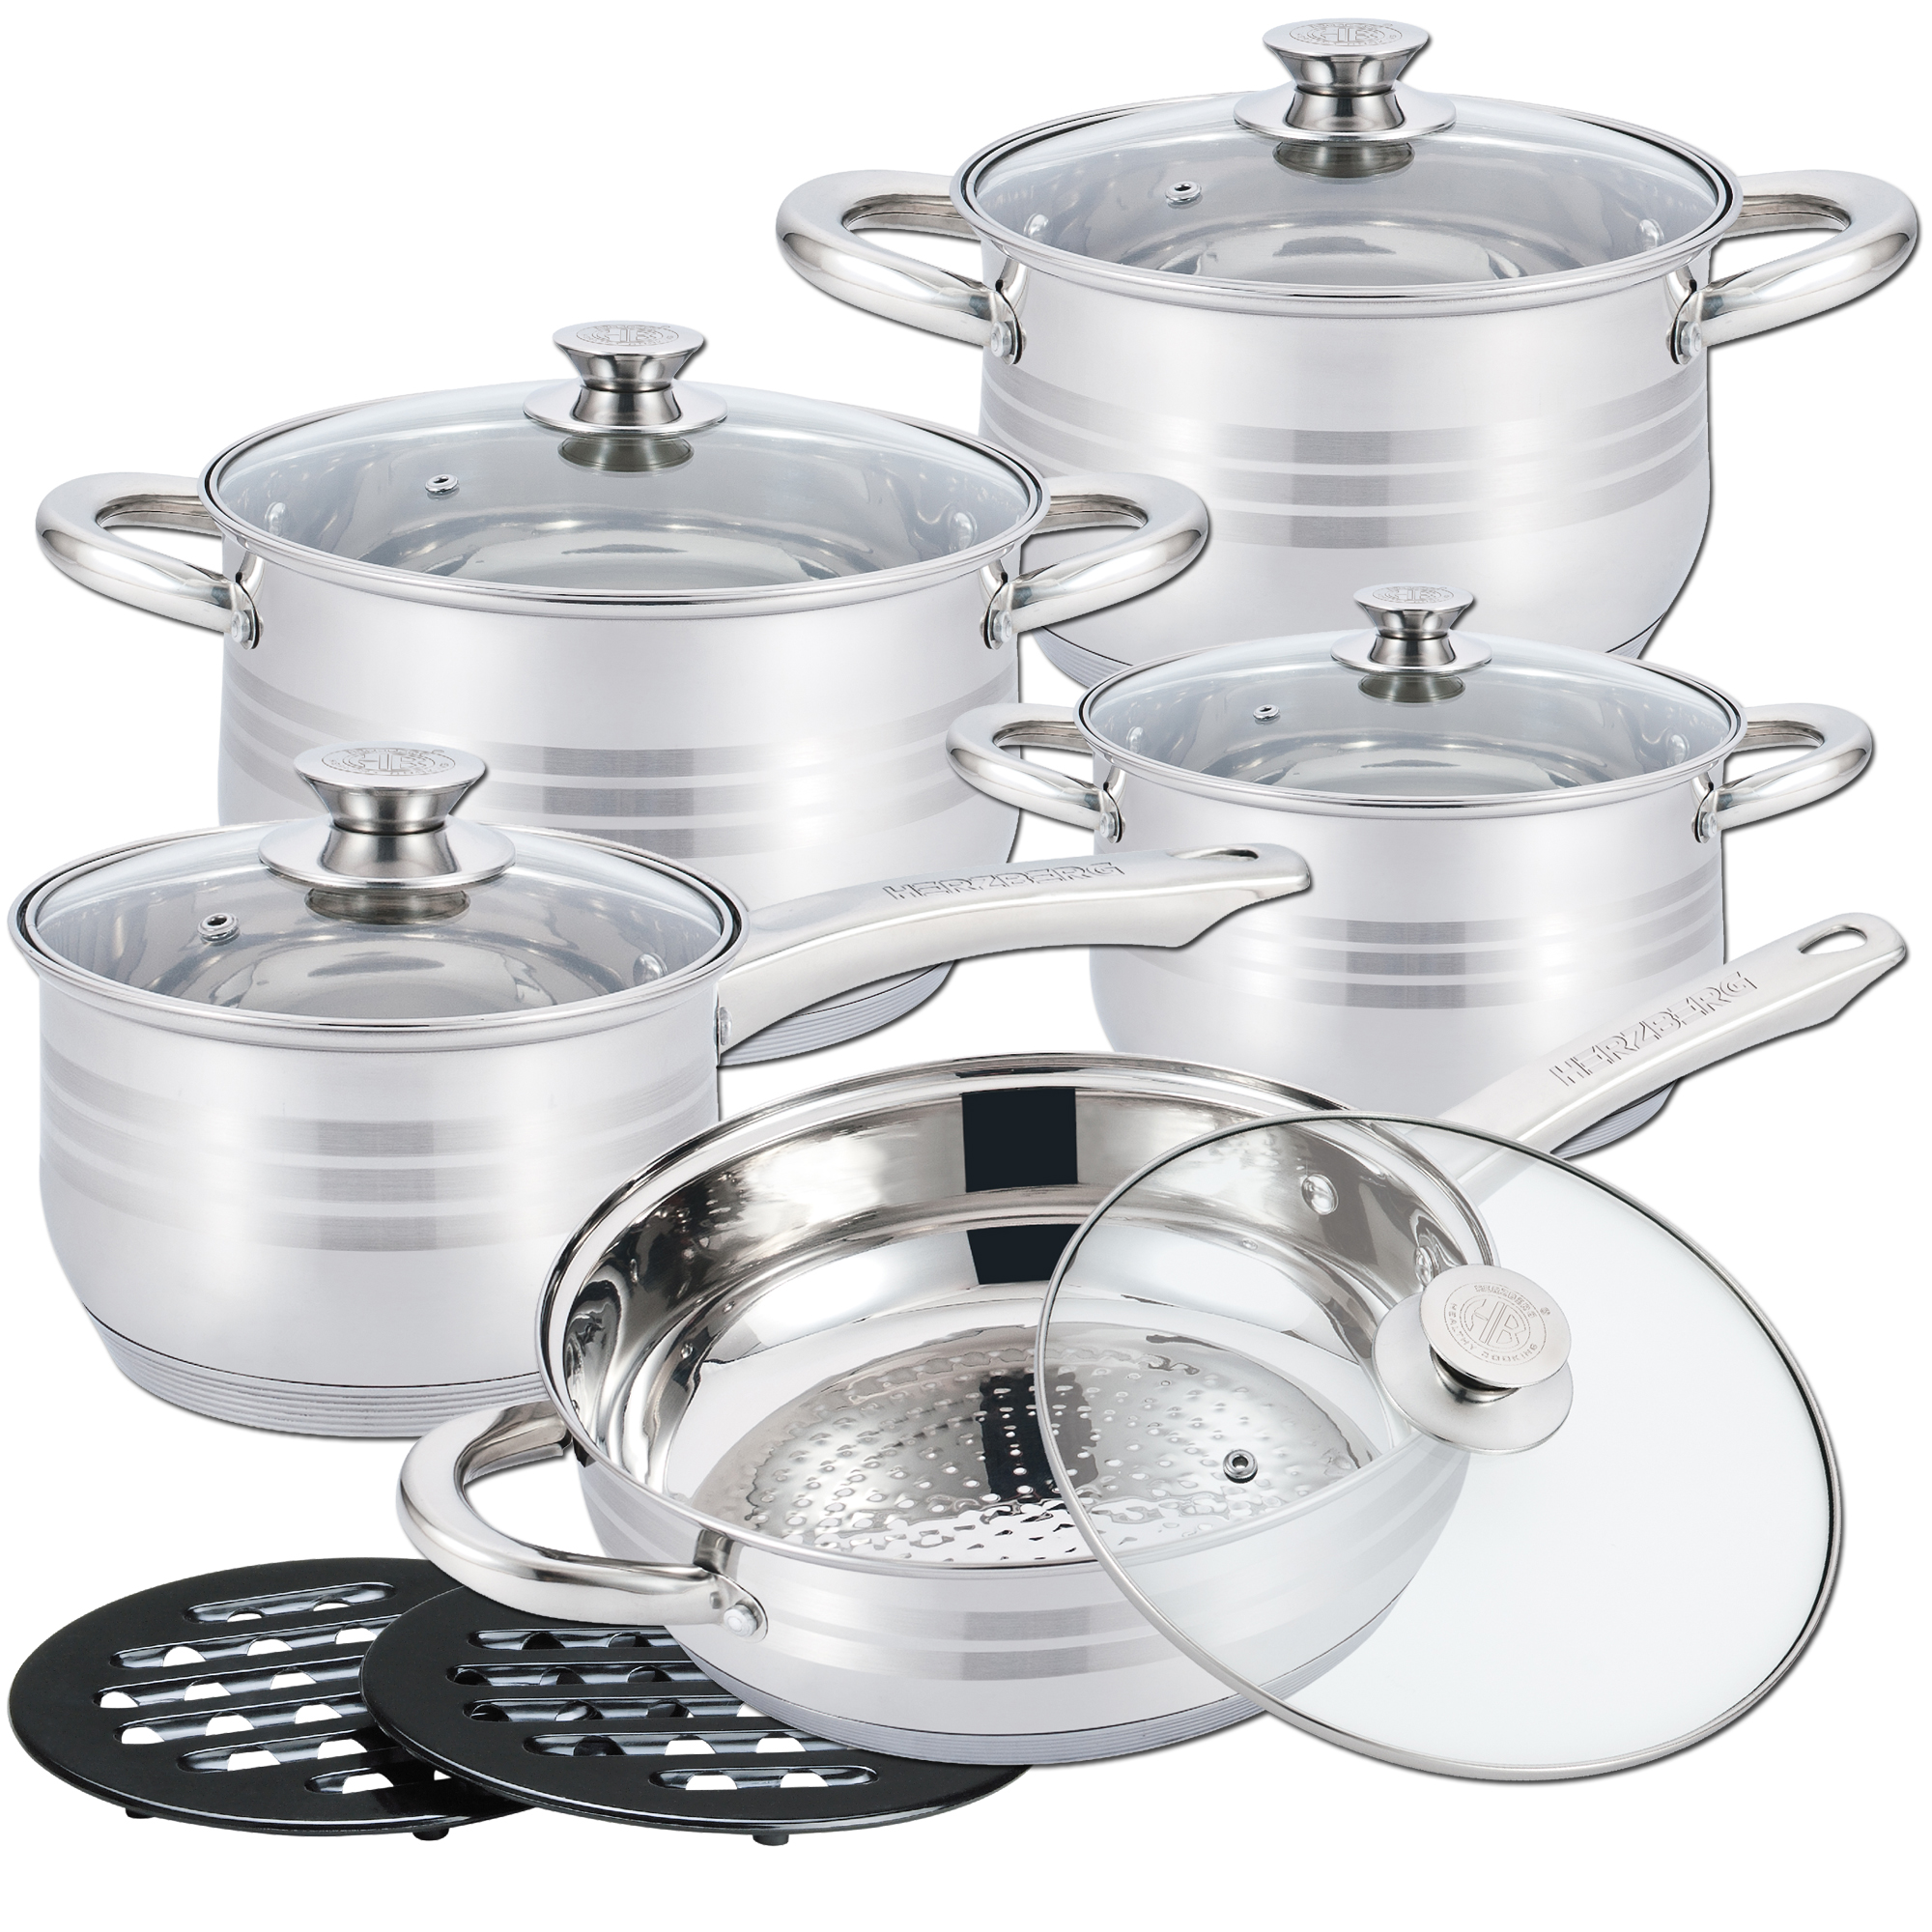 Herzberg 12 Pieces Stainless Steel Cookware Set